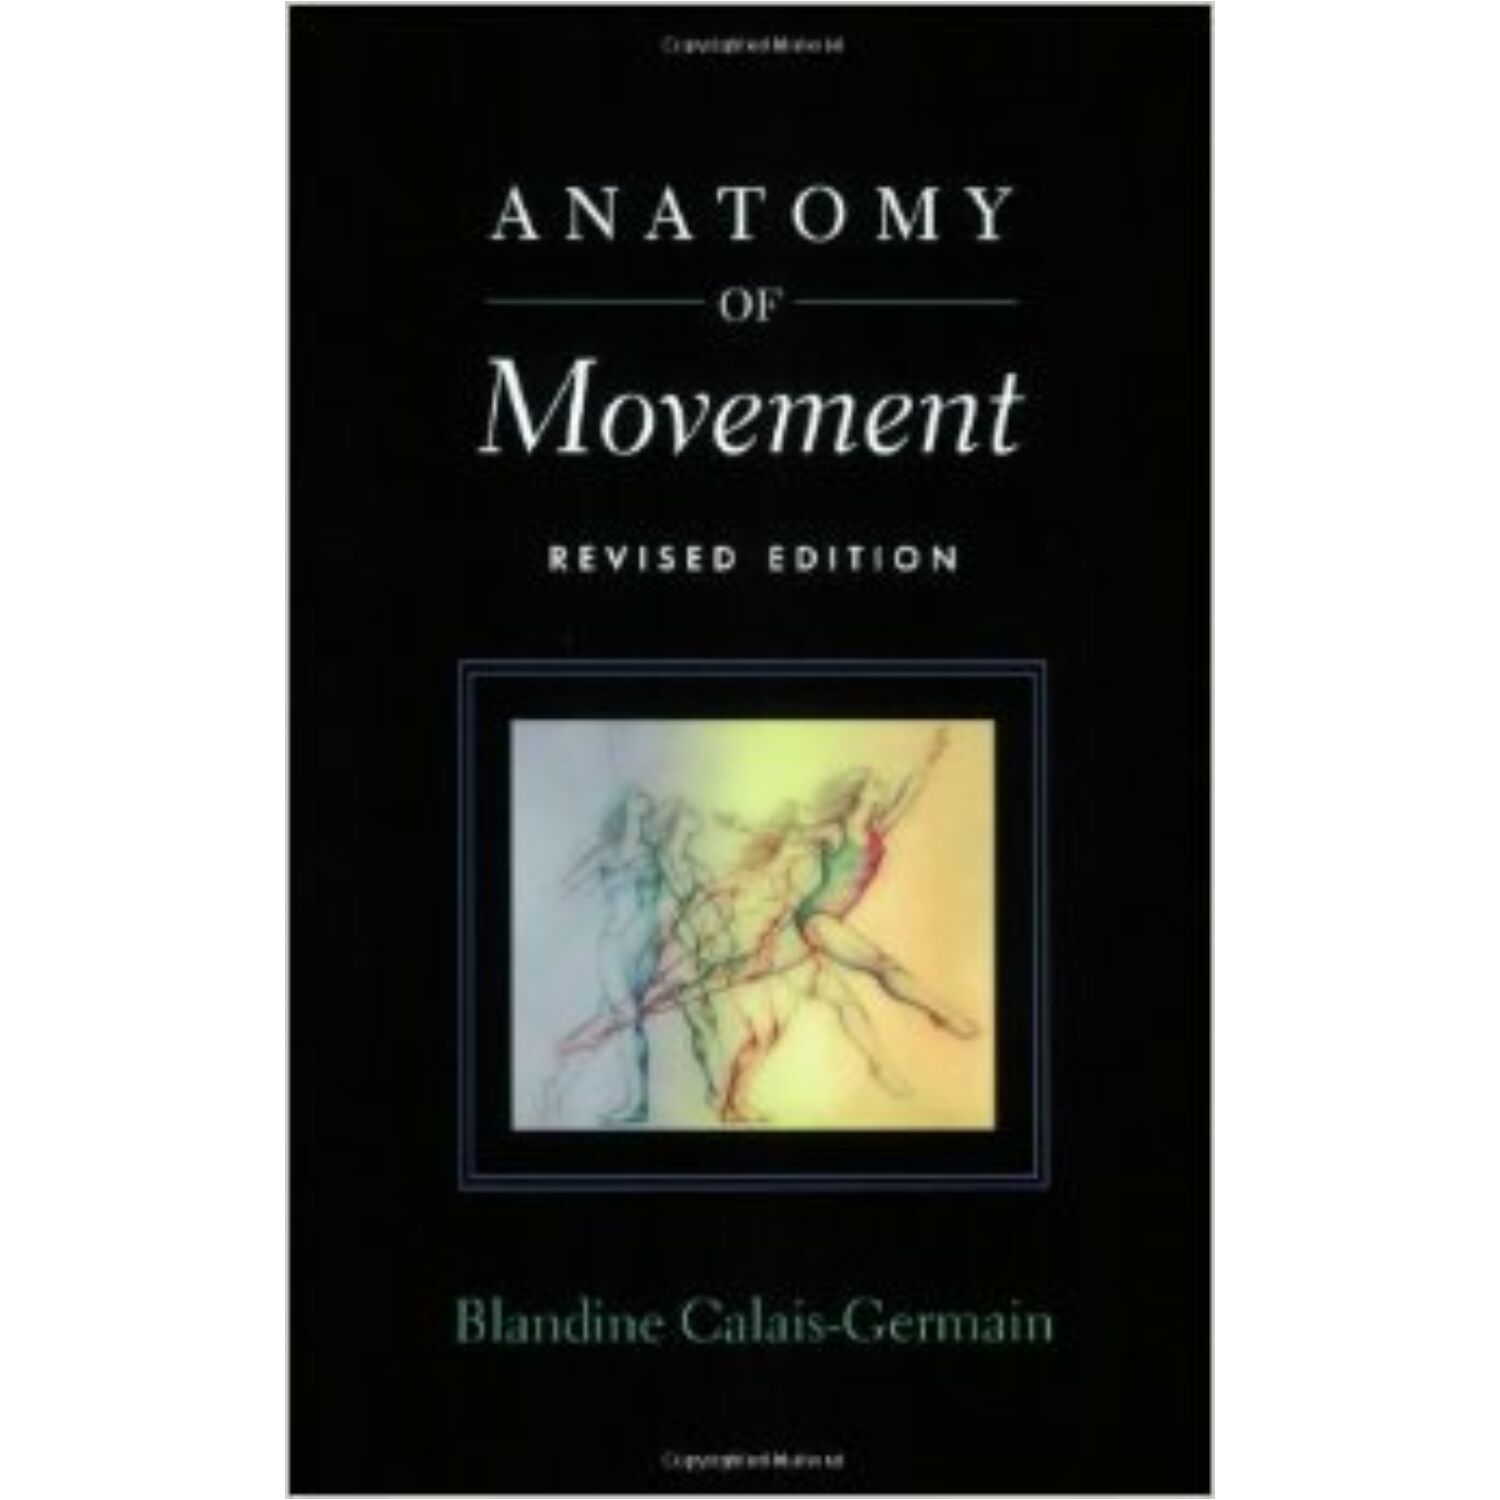 Anatomy of Movement book